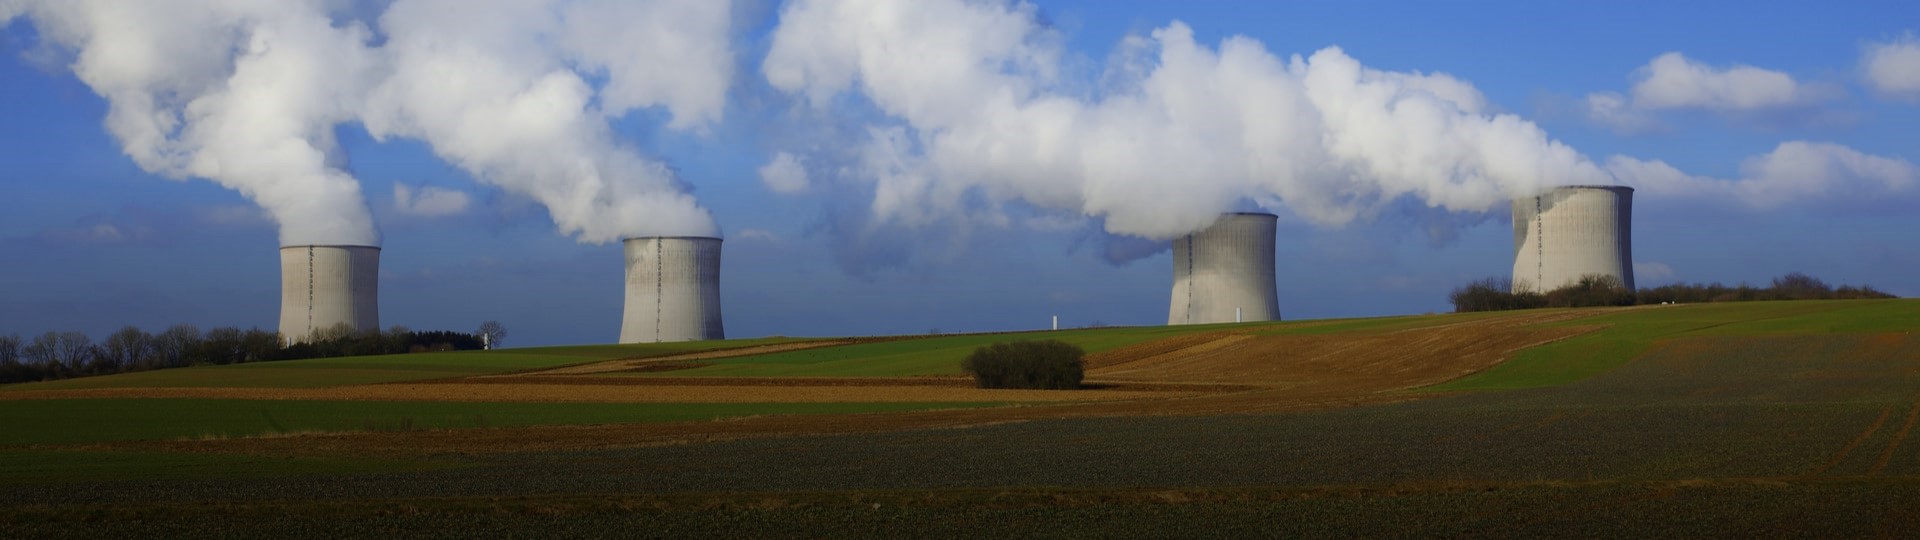 Druhý den stávky ve Francii omezil výkon jaderných elektráren